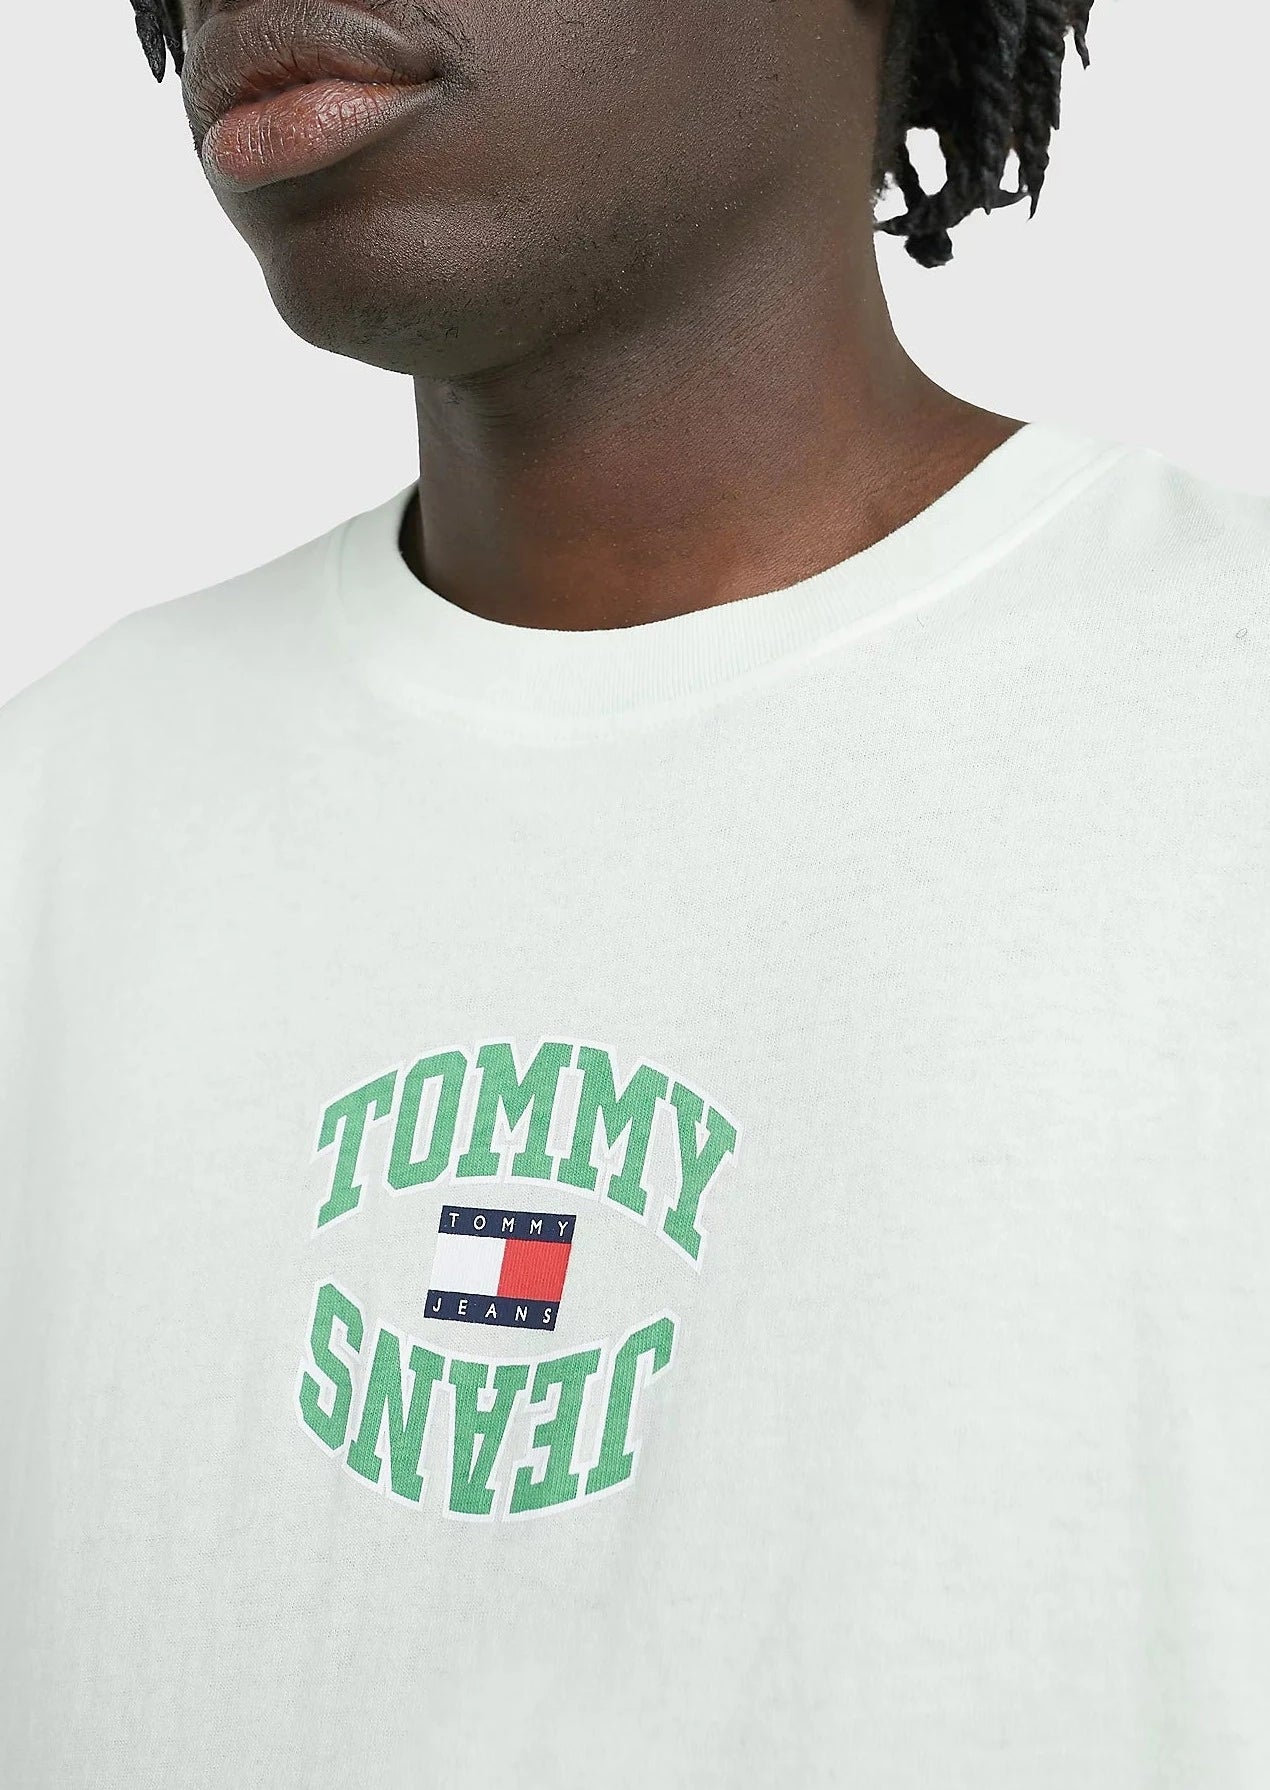 T-Shirt logo Tommy Jeans vert clair pour homme I Georgespaul